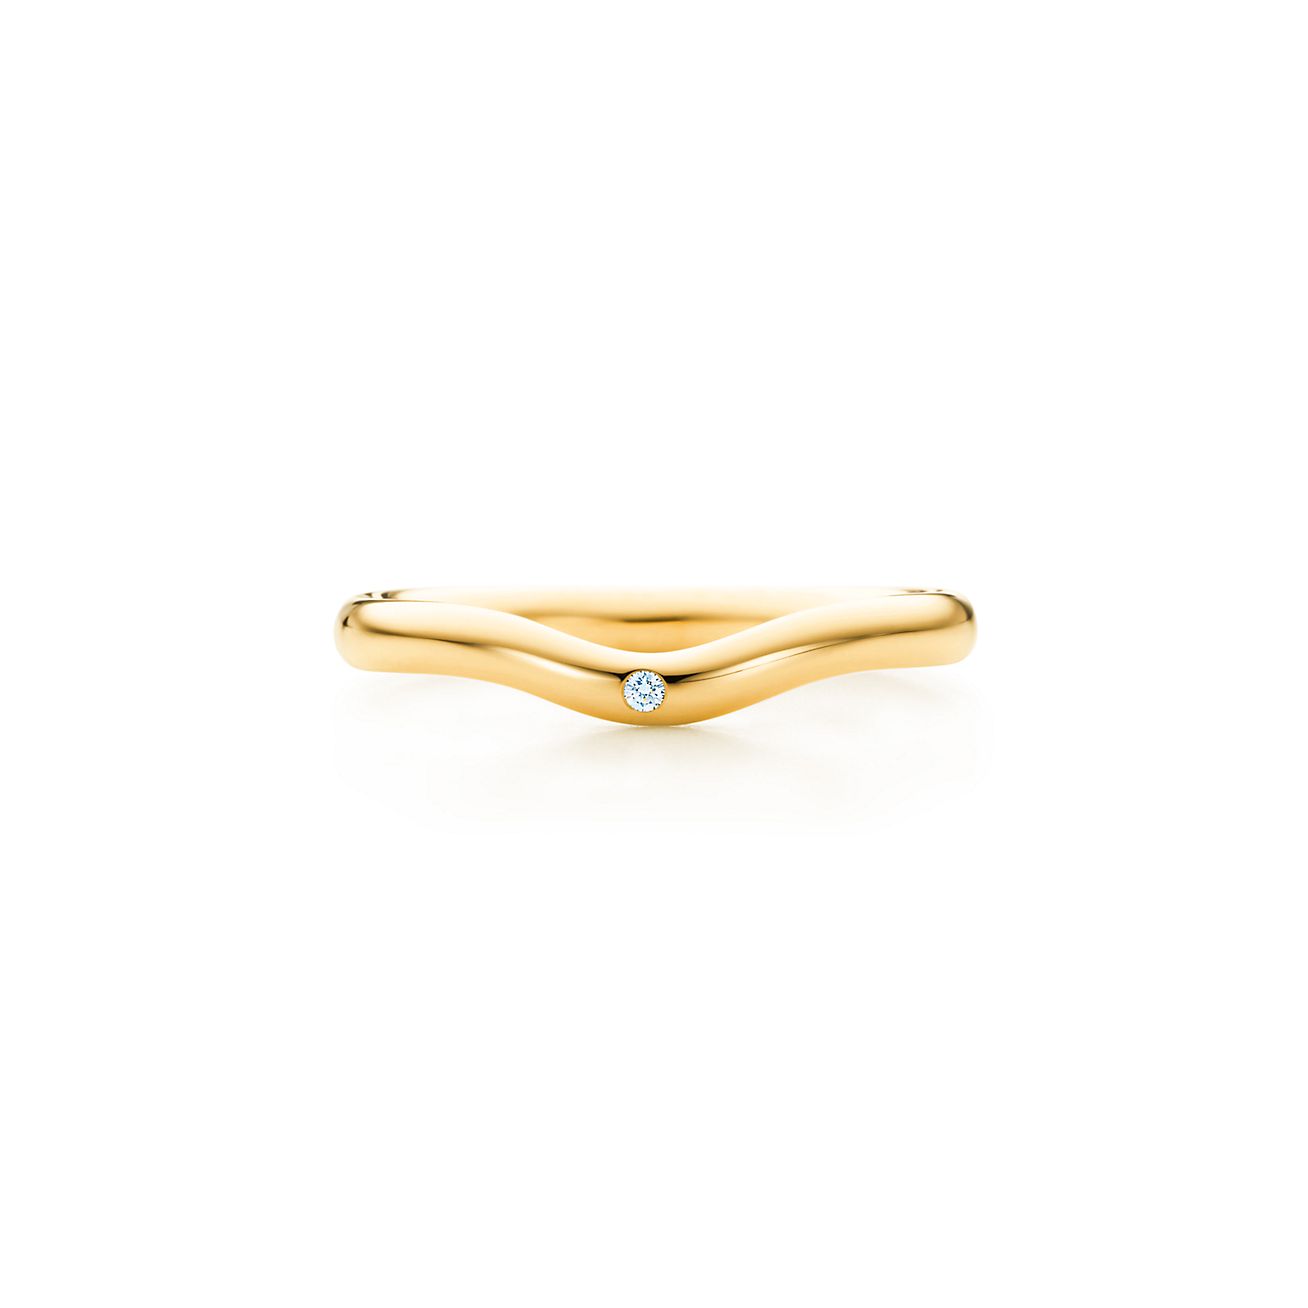 Elsa Peretti® wedding band ring with a 